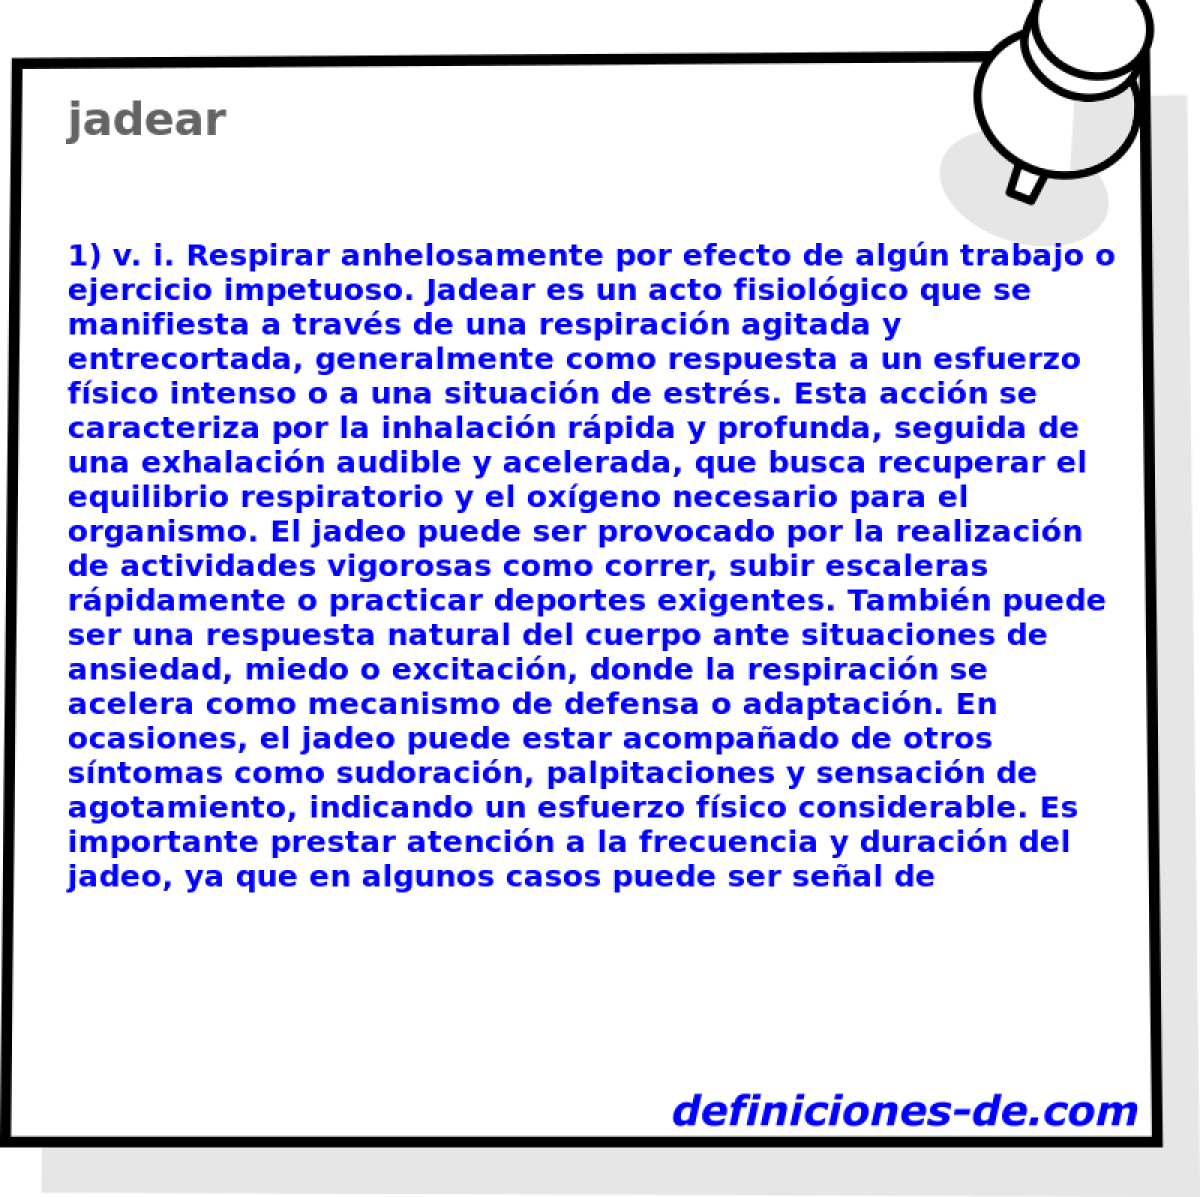 jadear 